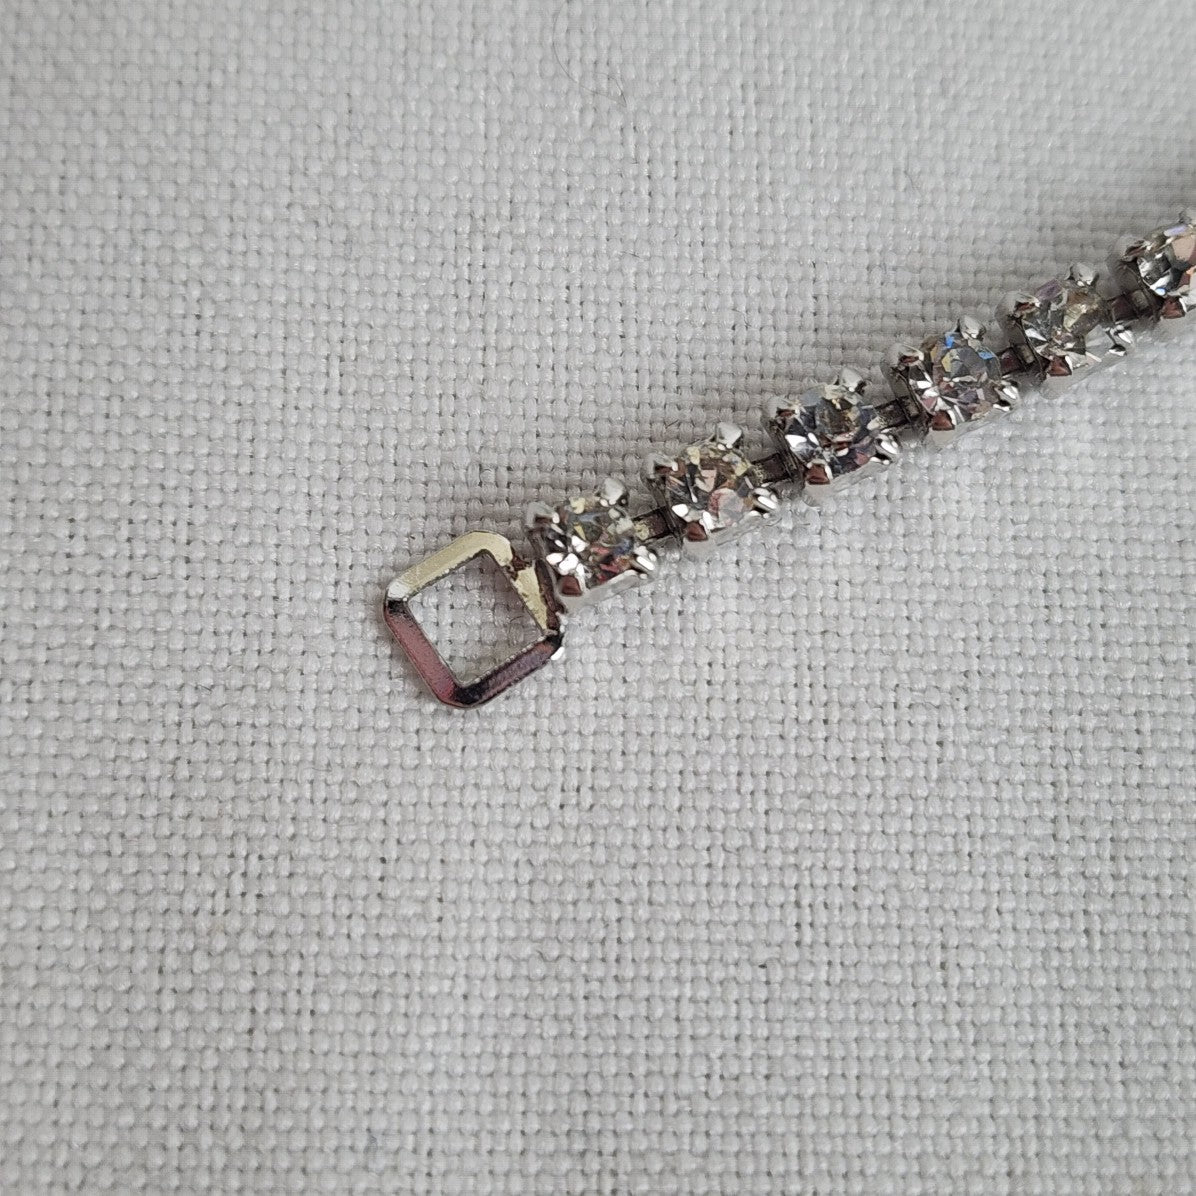 Vintage Silver Tone Rhinestone Crystal Bracelet